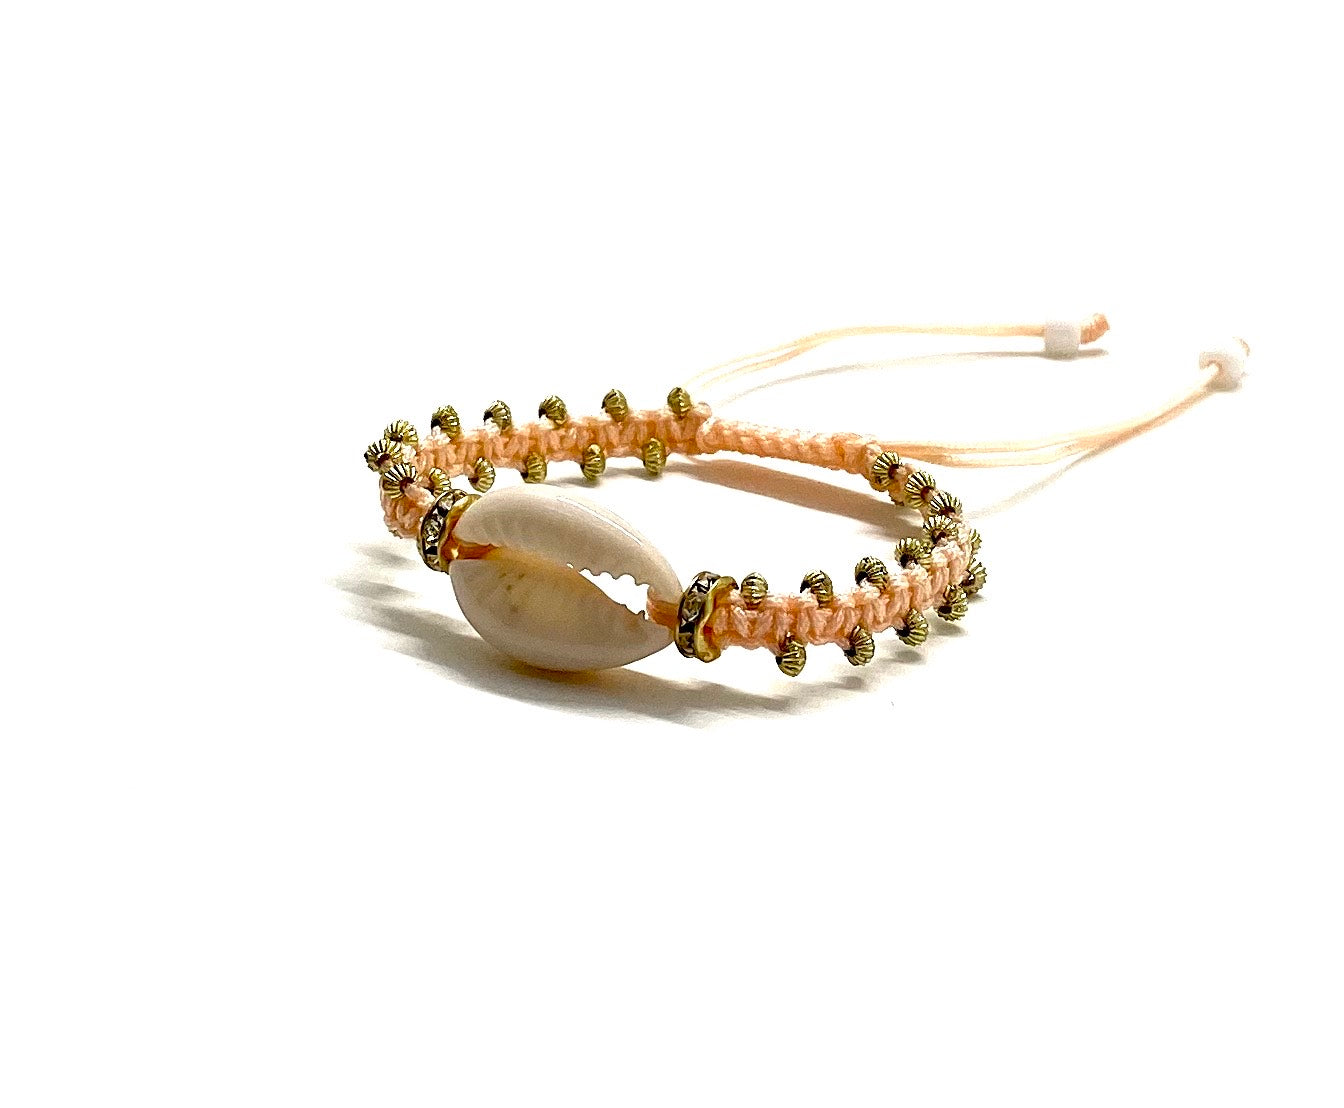 Natural shell bracelet pastel peach cord, gold toupee